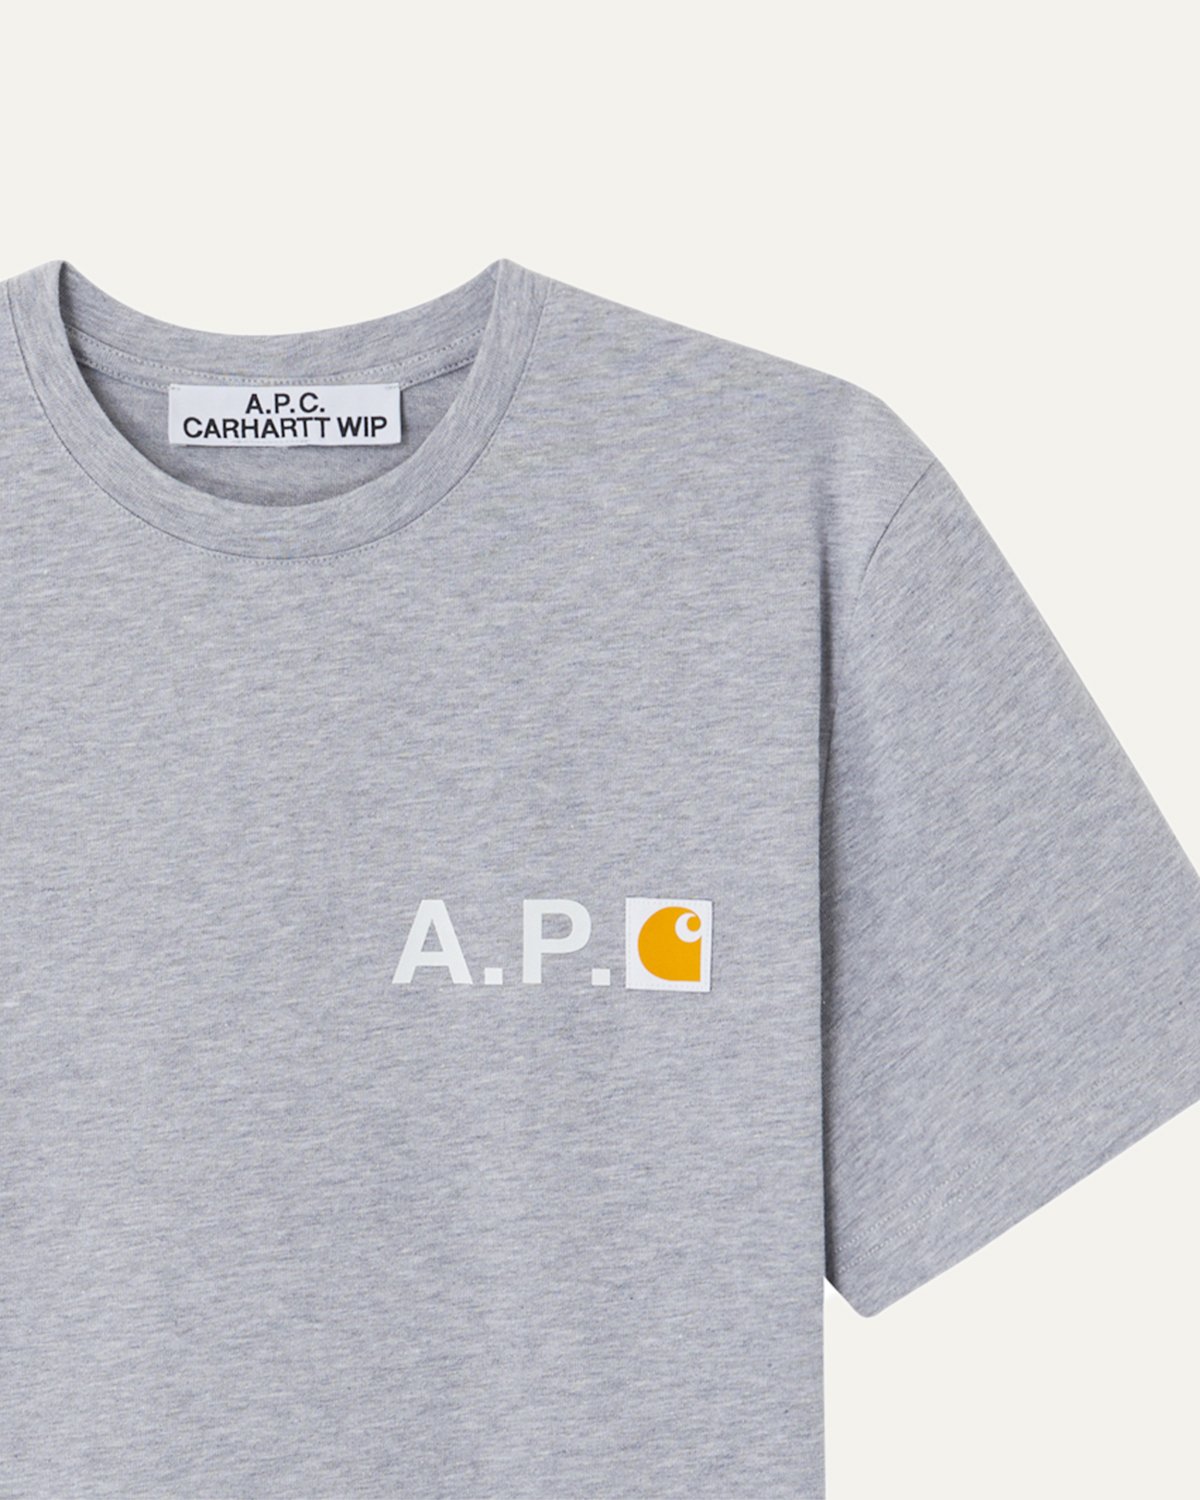 A.P.C. x Carhartt WIP - Fire T-Shirt Grey - Tops - Grey - Image 3